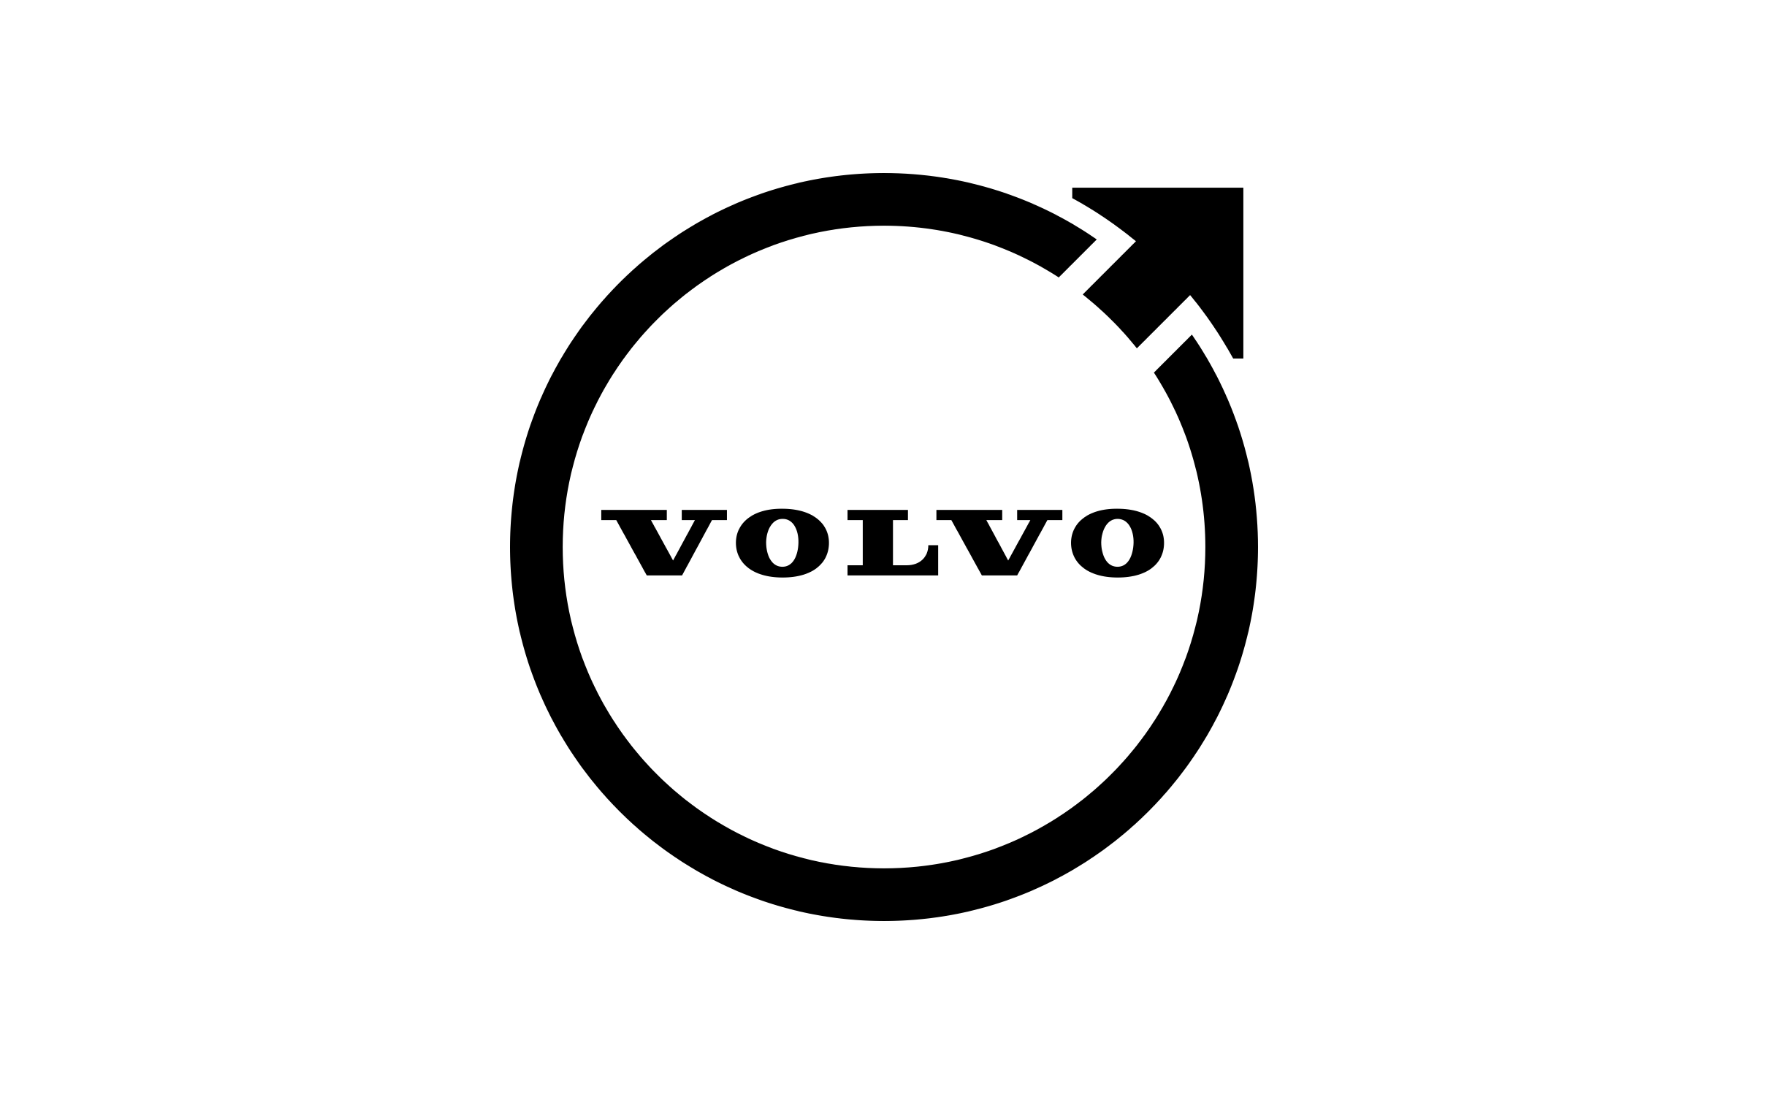 Logo for Volvo